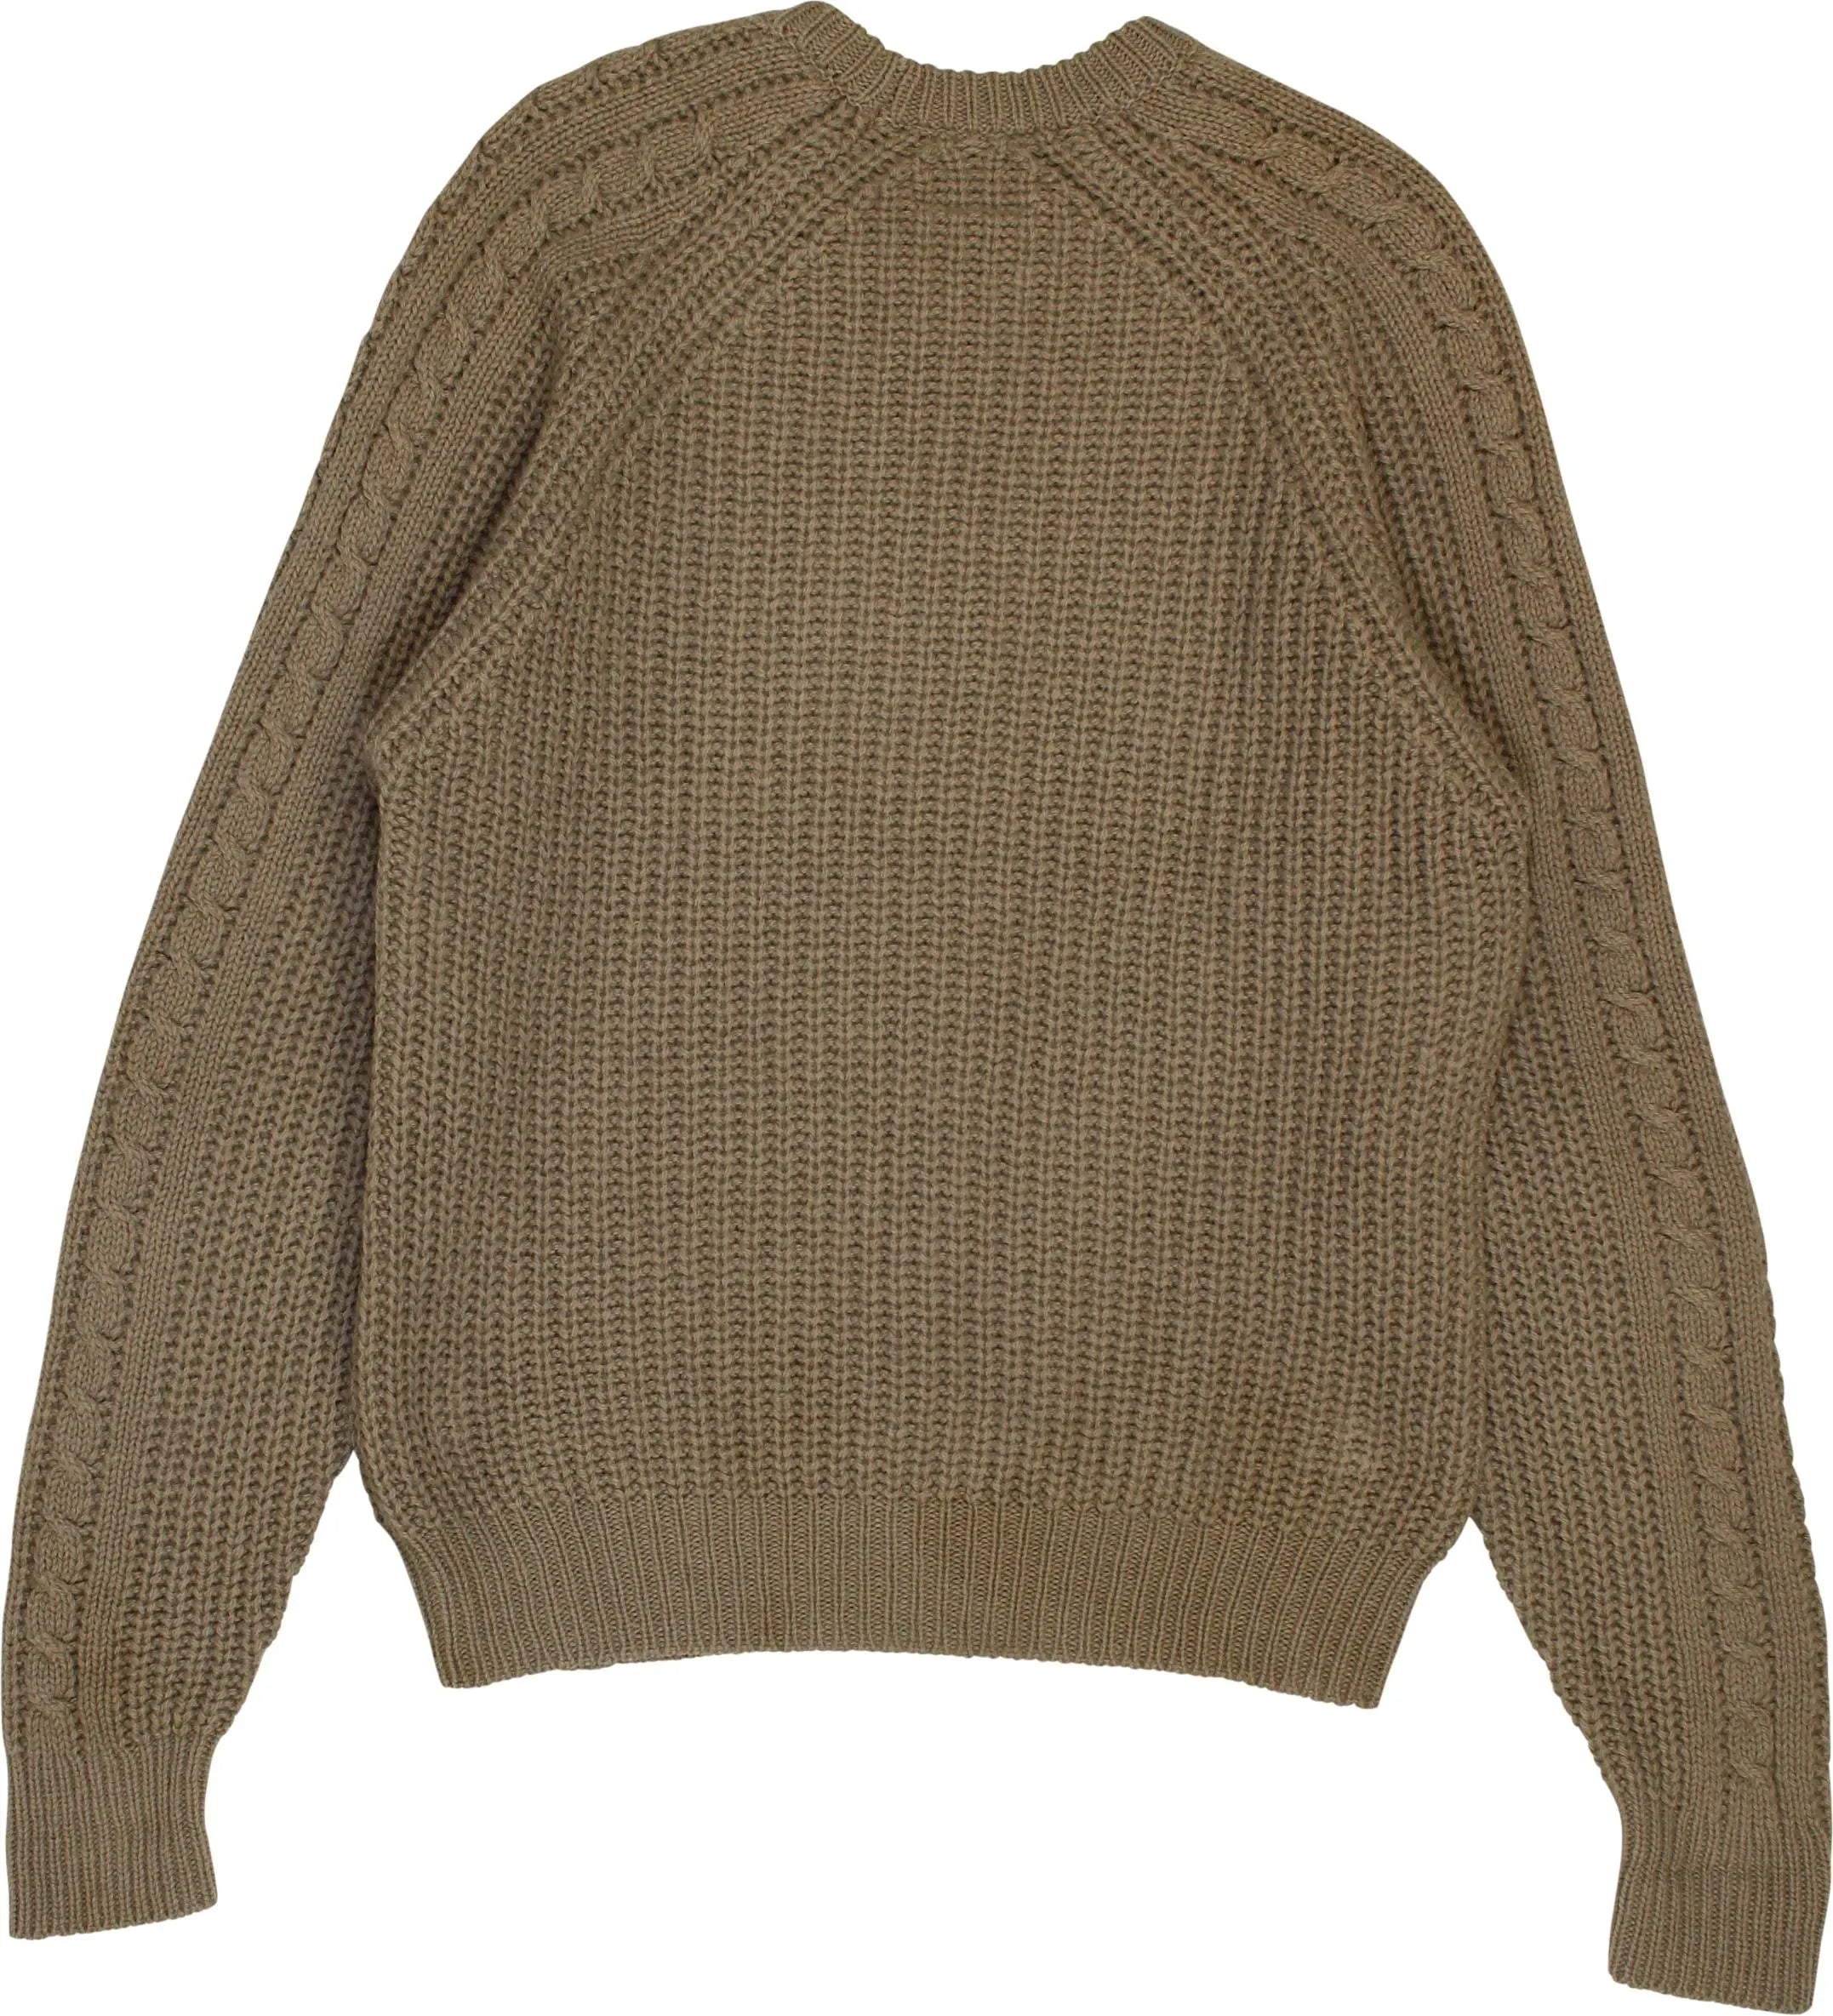 Kebek Knitwear - 90's Wool Jumper- ThriftTale.com - Vintage and second handclothing